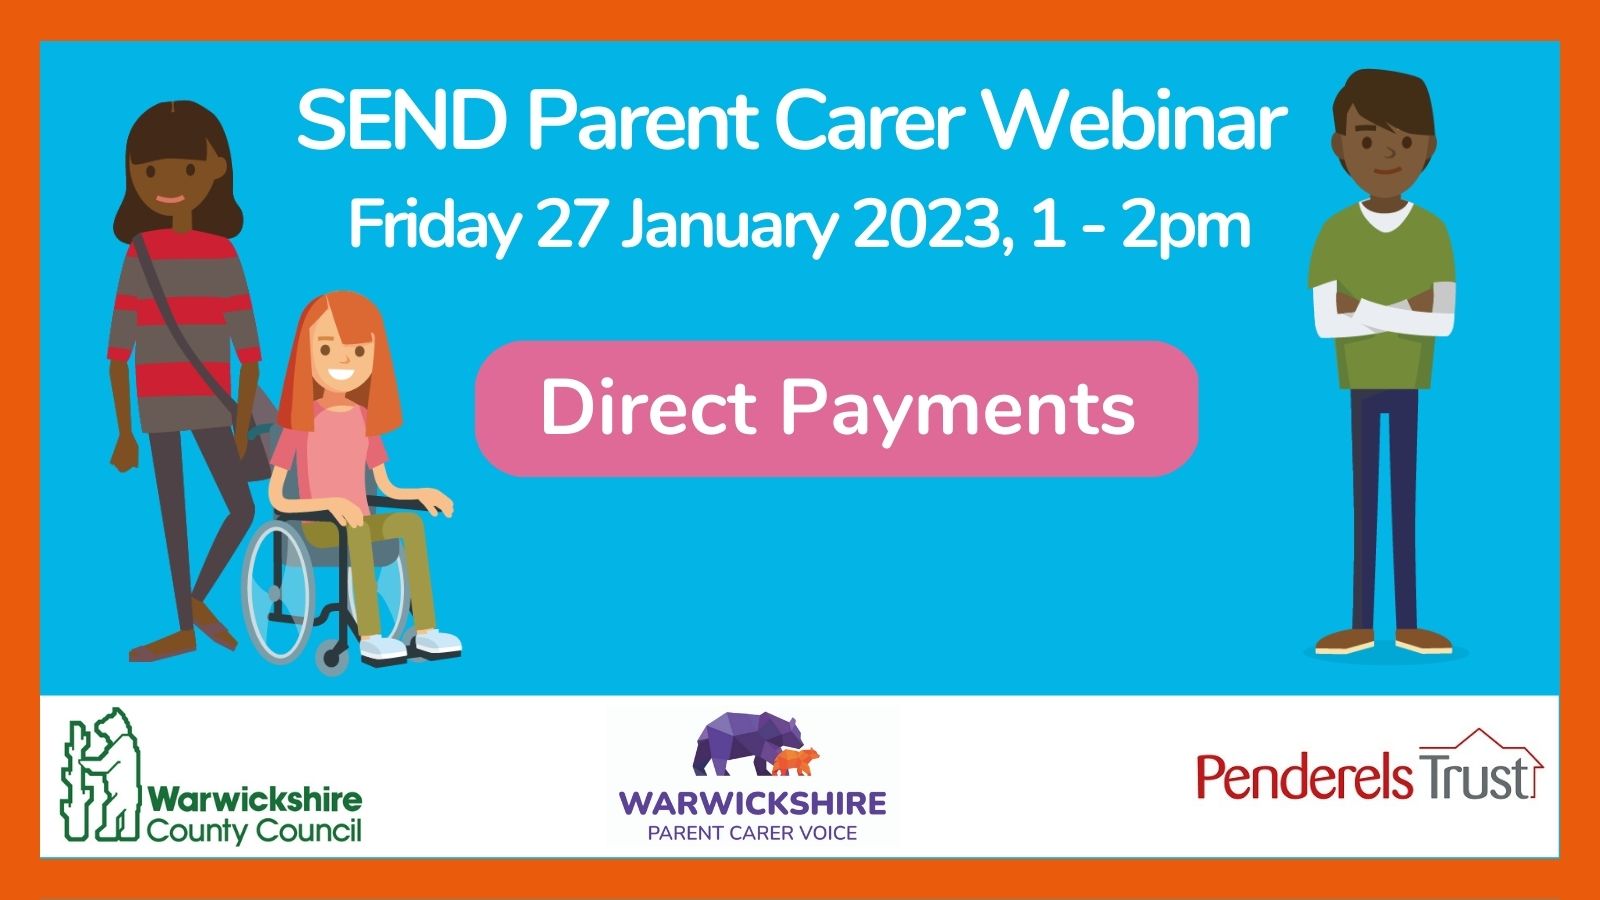 SEND Parent Carer Webinar, Friday 27 January 2023 - Direct Payments